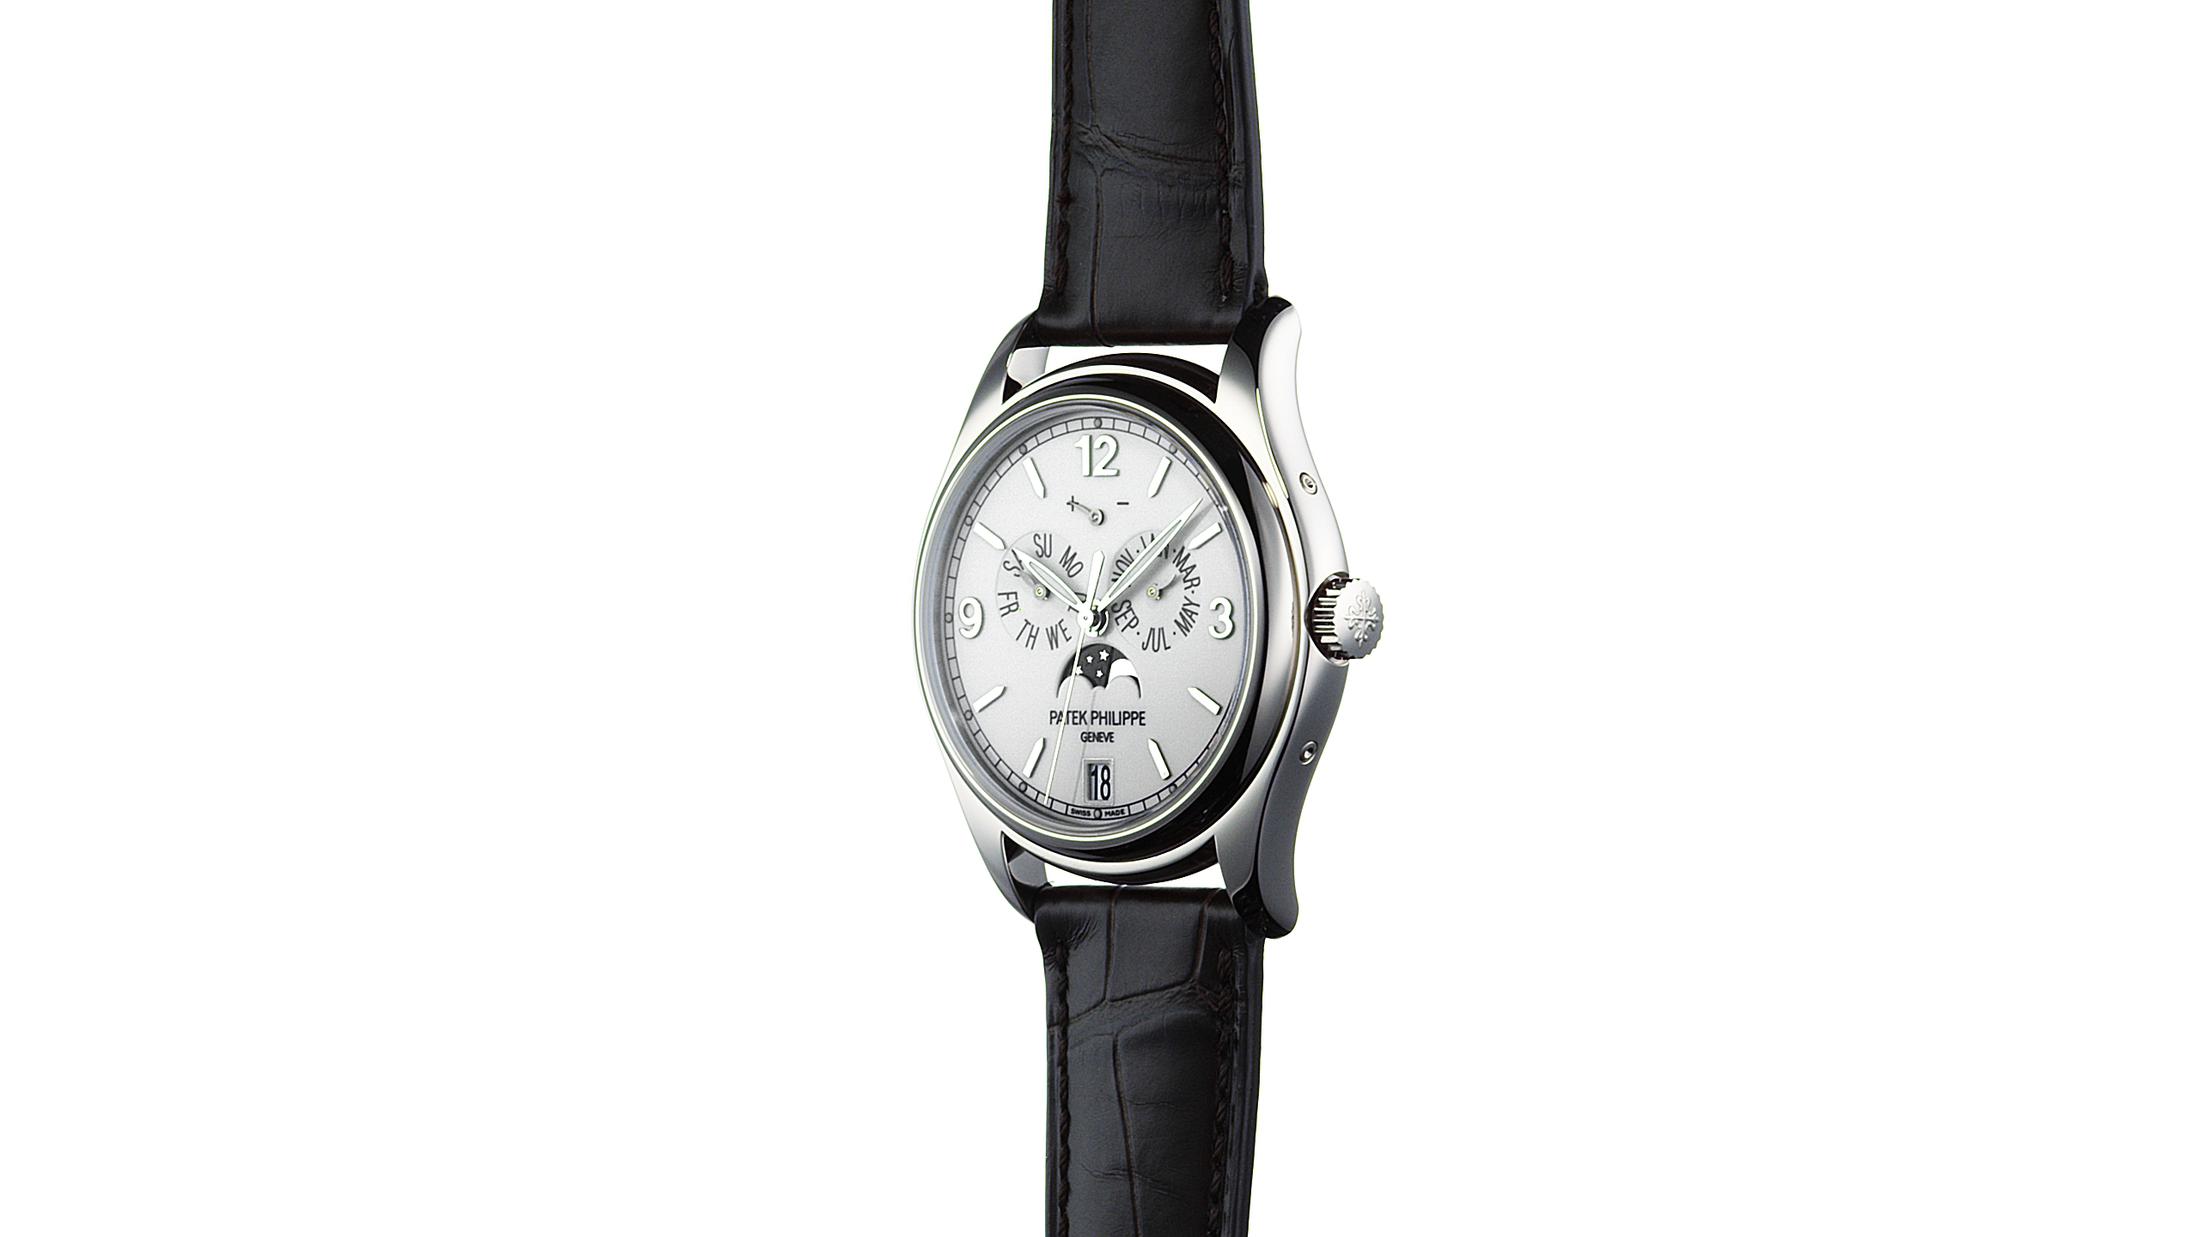 Patek Philippe Patek Philippe Perpetual Calendar Grand Complication 5159R-001 White Dial New Watch Men's Watch